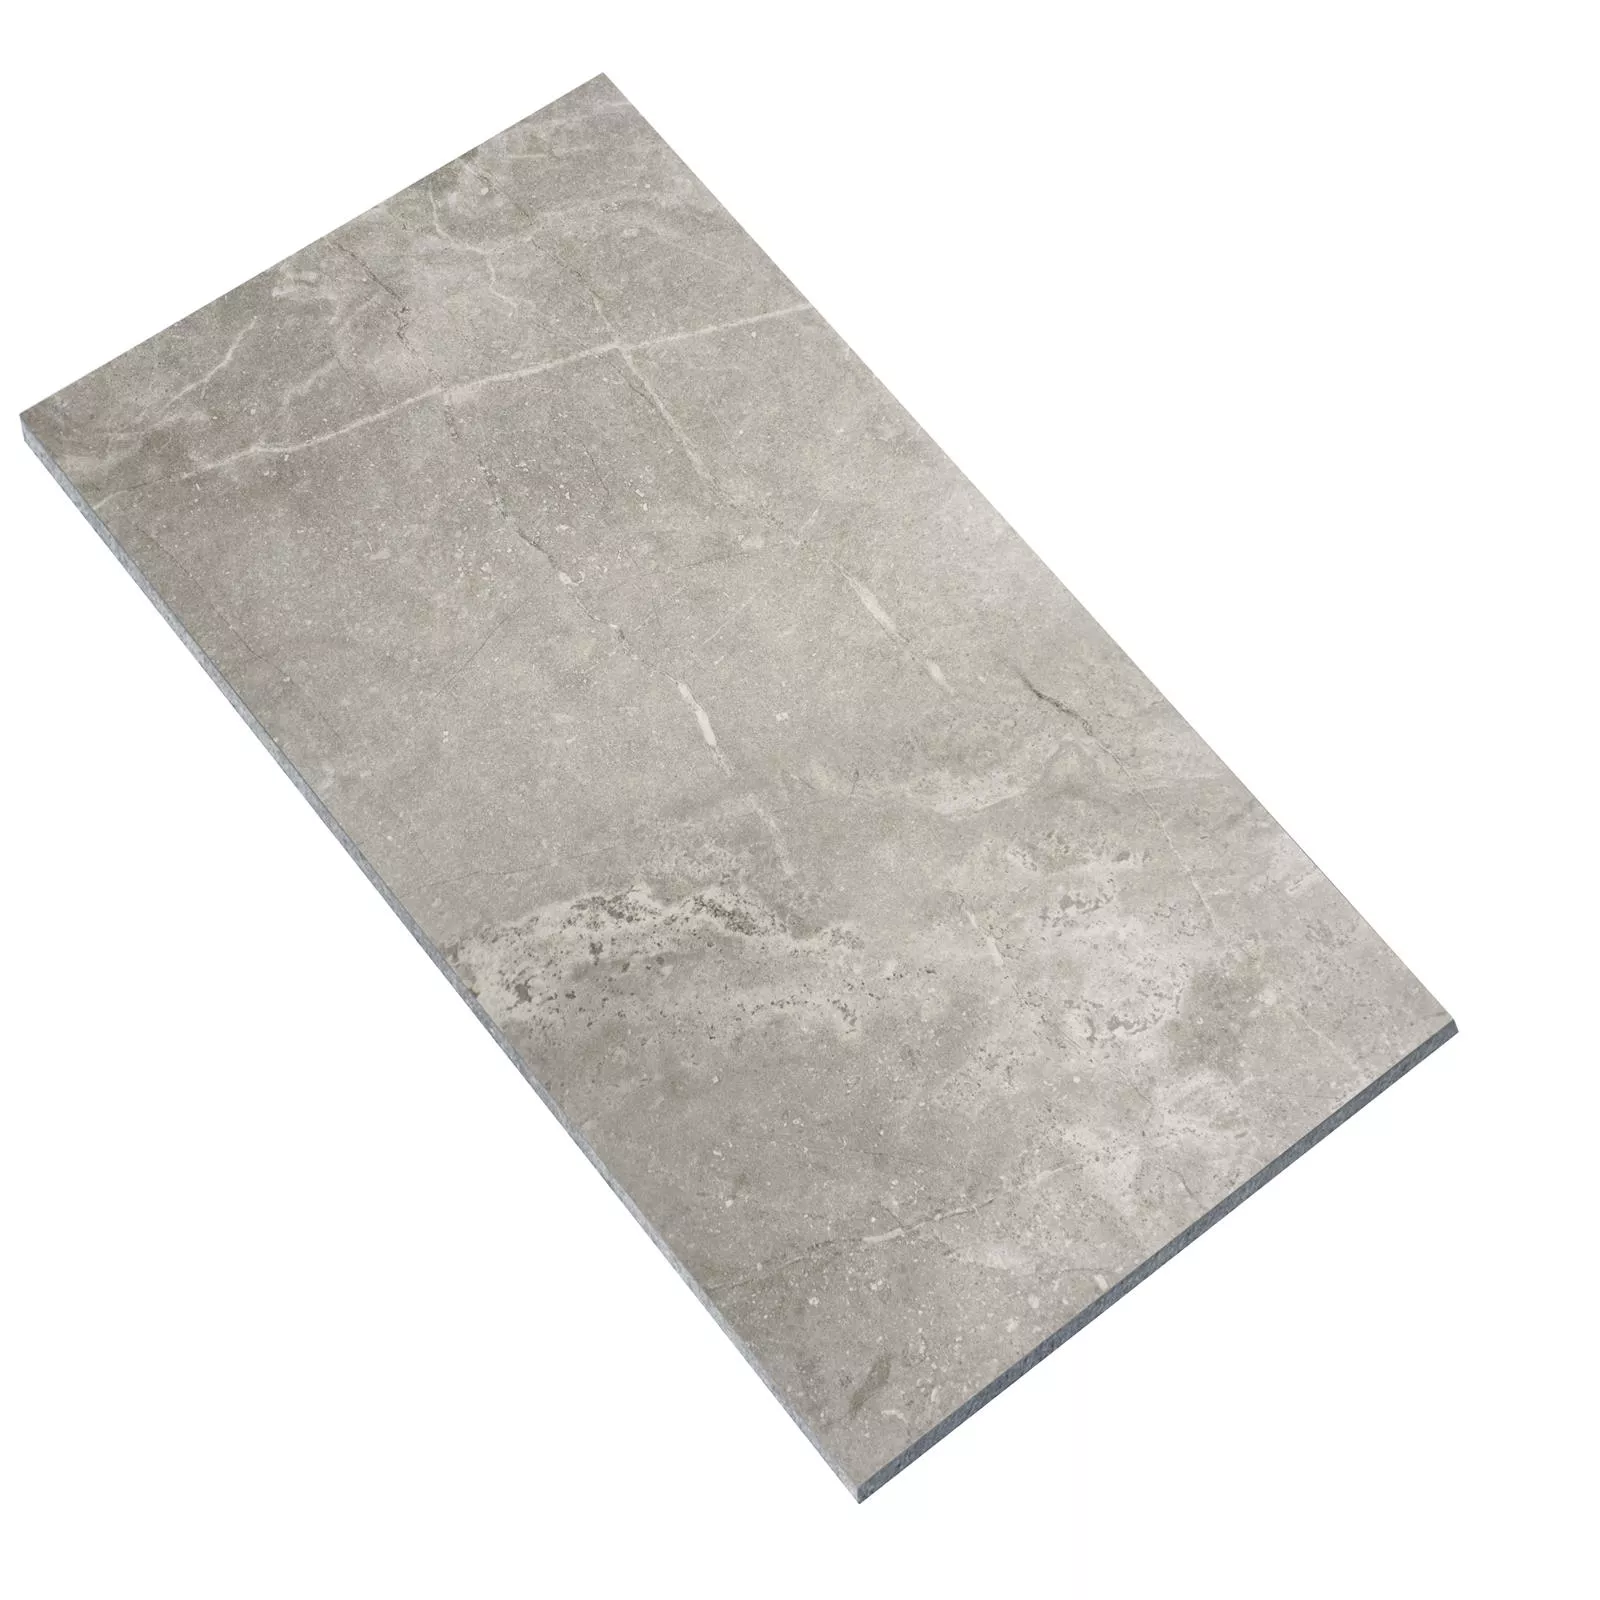 Sample Floor Tiles Stone Optic Newton Grey 30x60cm